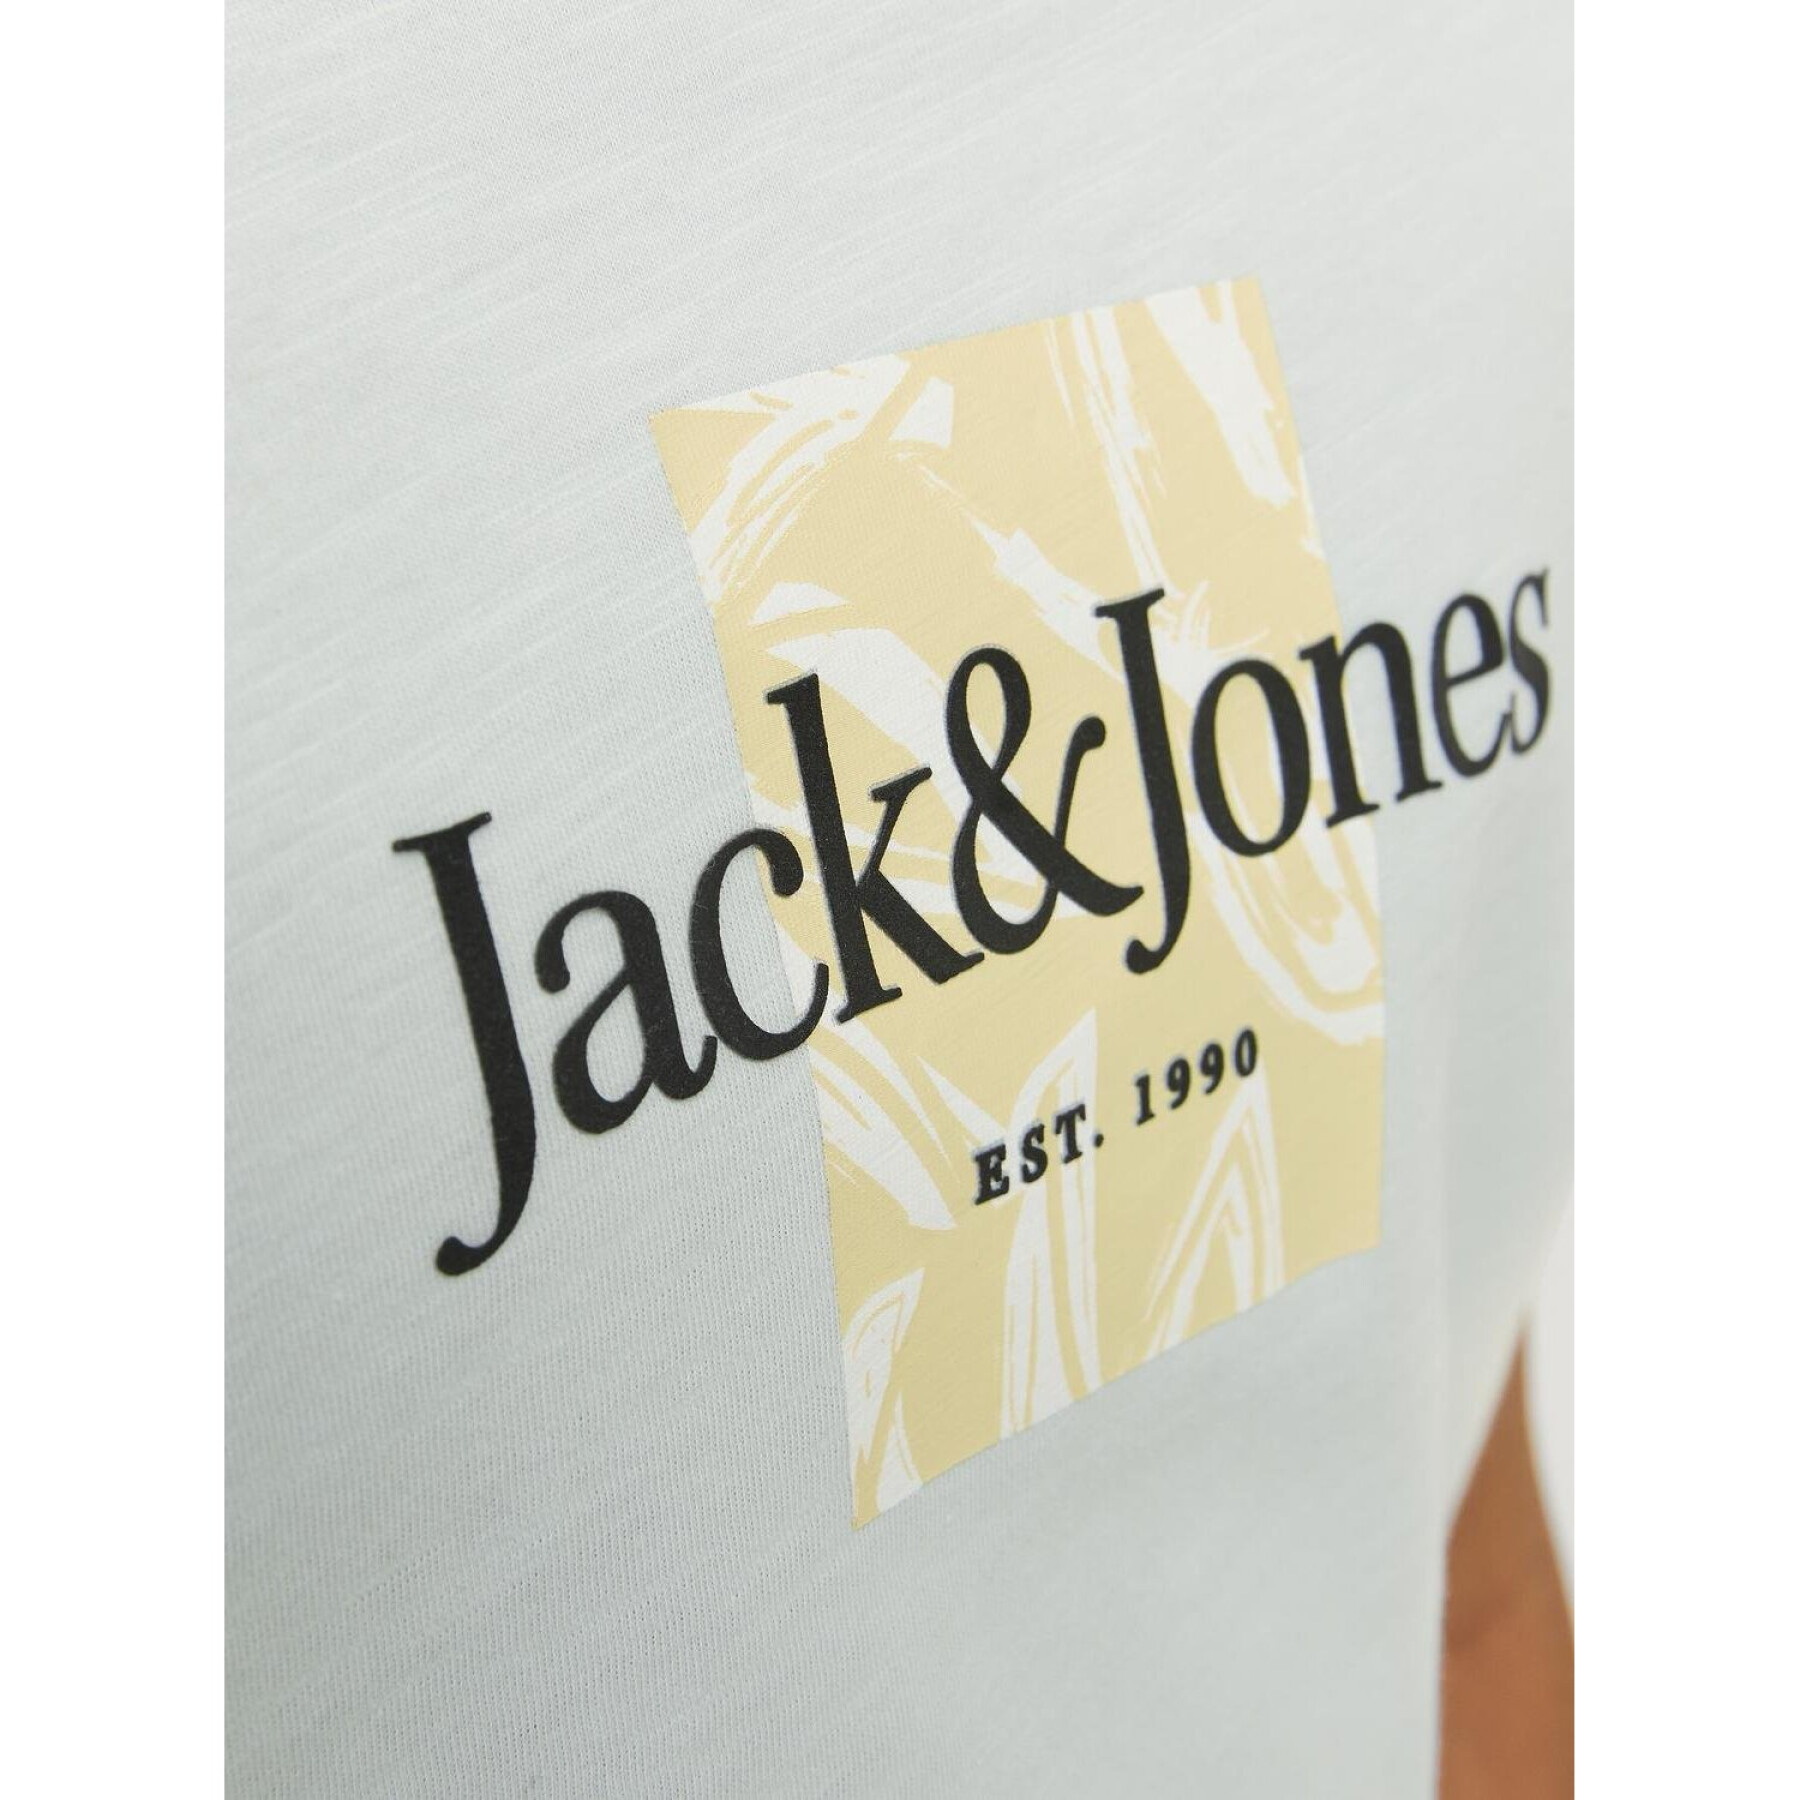 T-shirt per bambini Jack & Jones Lafayette Branding